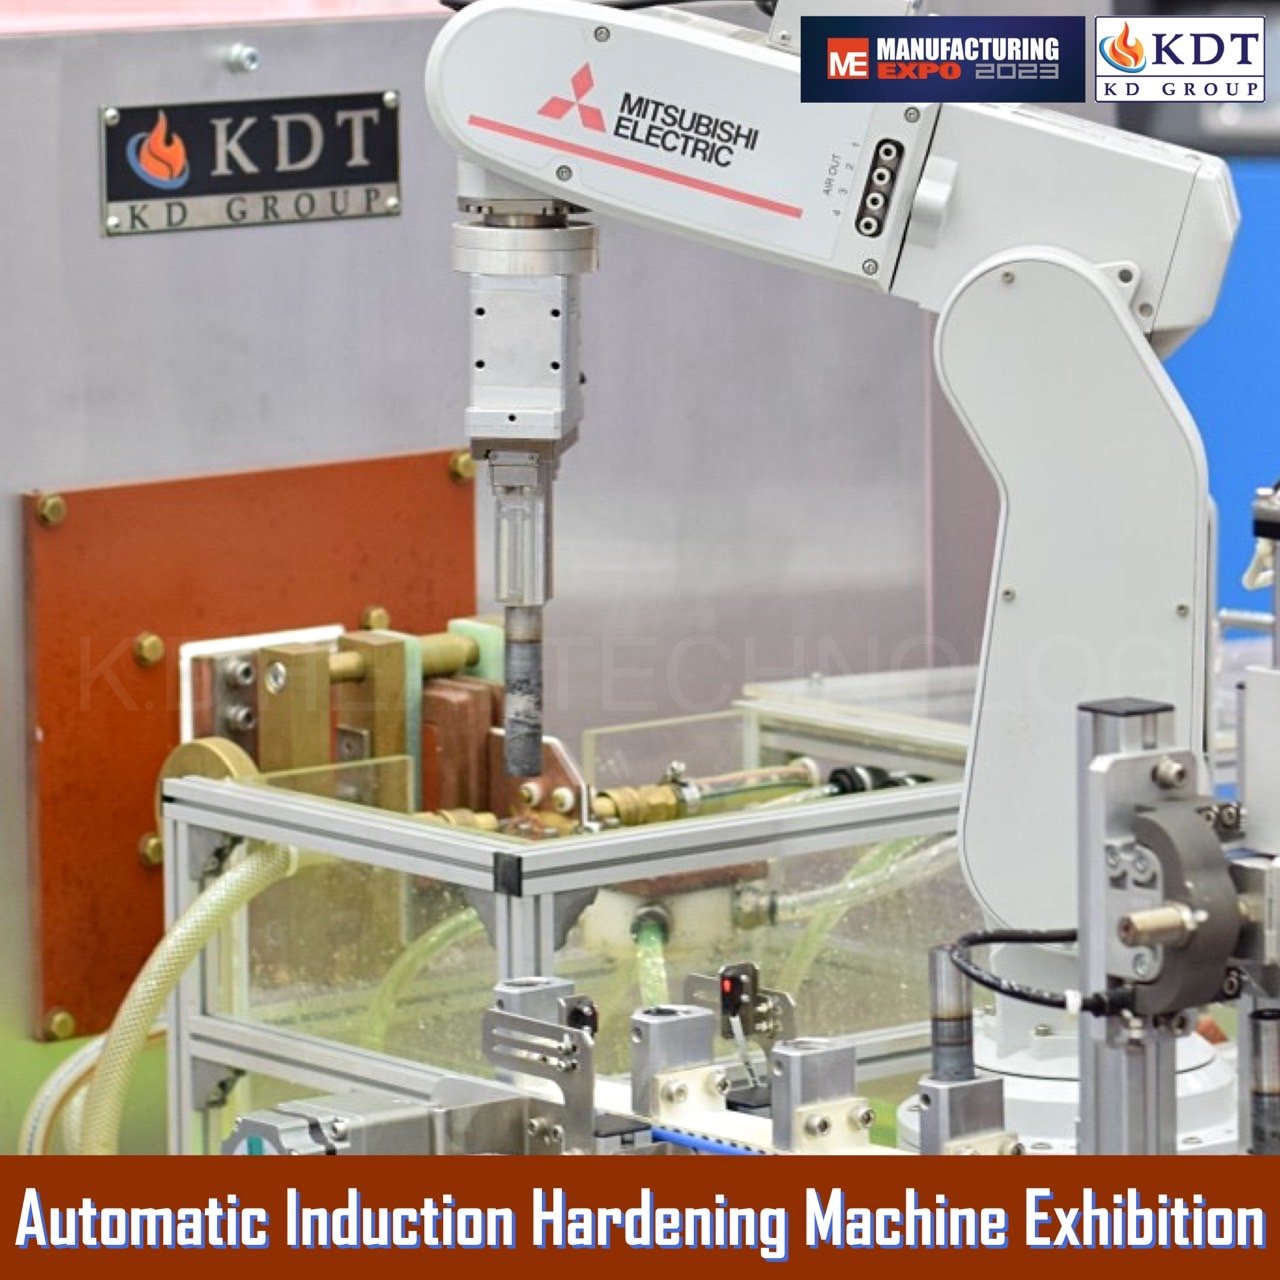 K.D. HEAT TECHNOLOGY Exhibition Automatic Induction Hardening Machine.